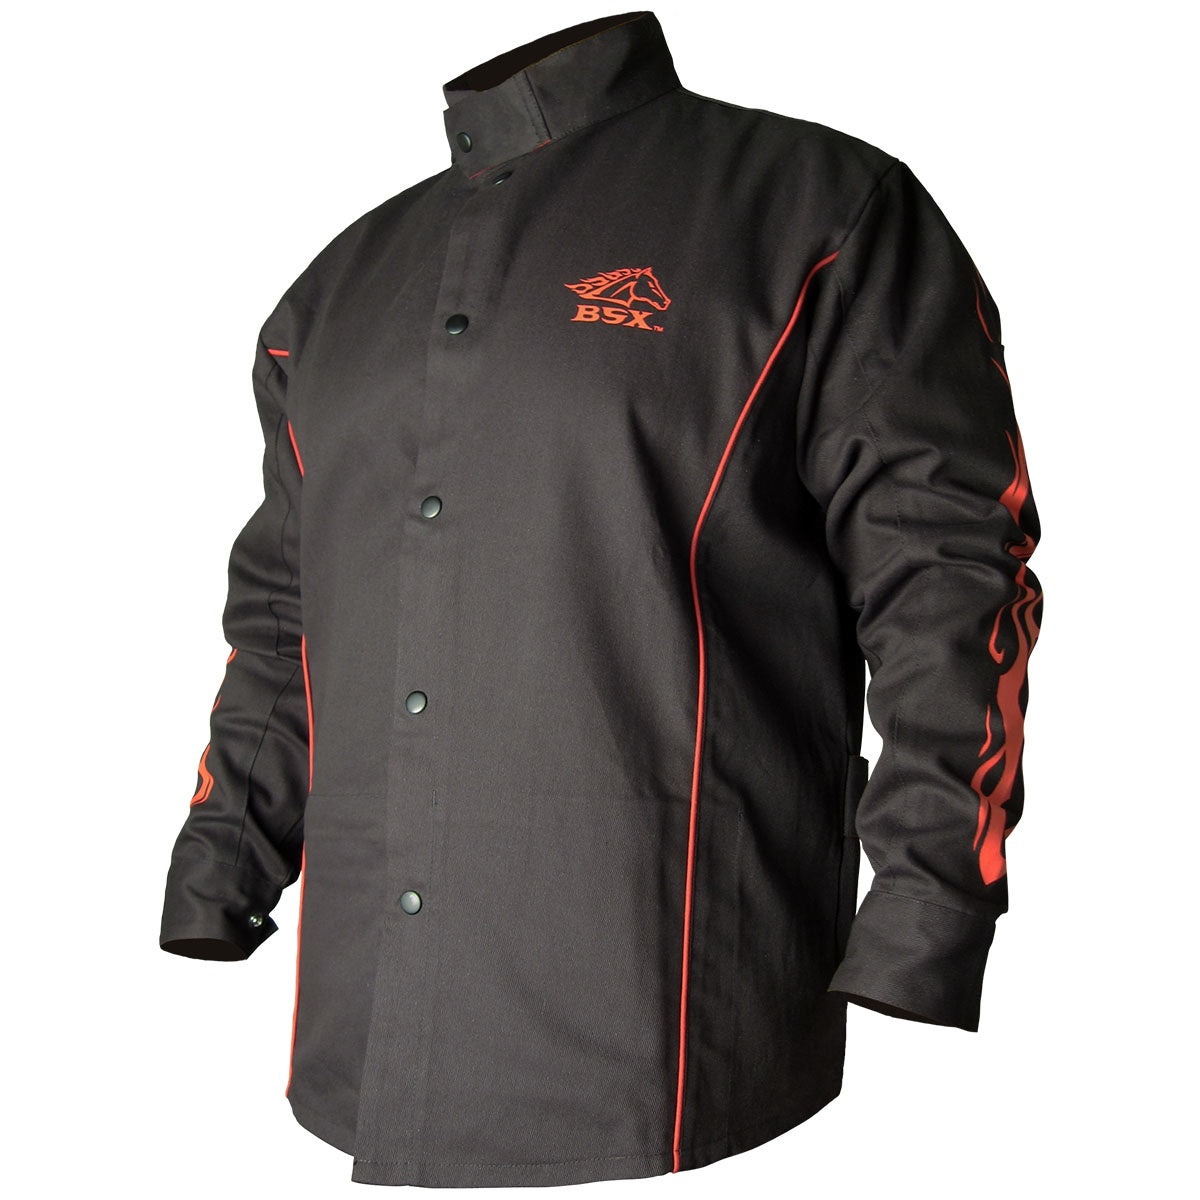 Revco Black Stallion BSX 9oz Black w/Red Flames FR Cotton Welding Jacket (BX9C)